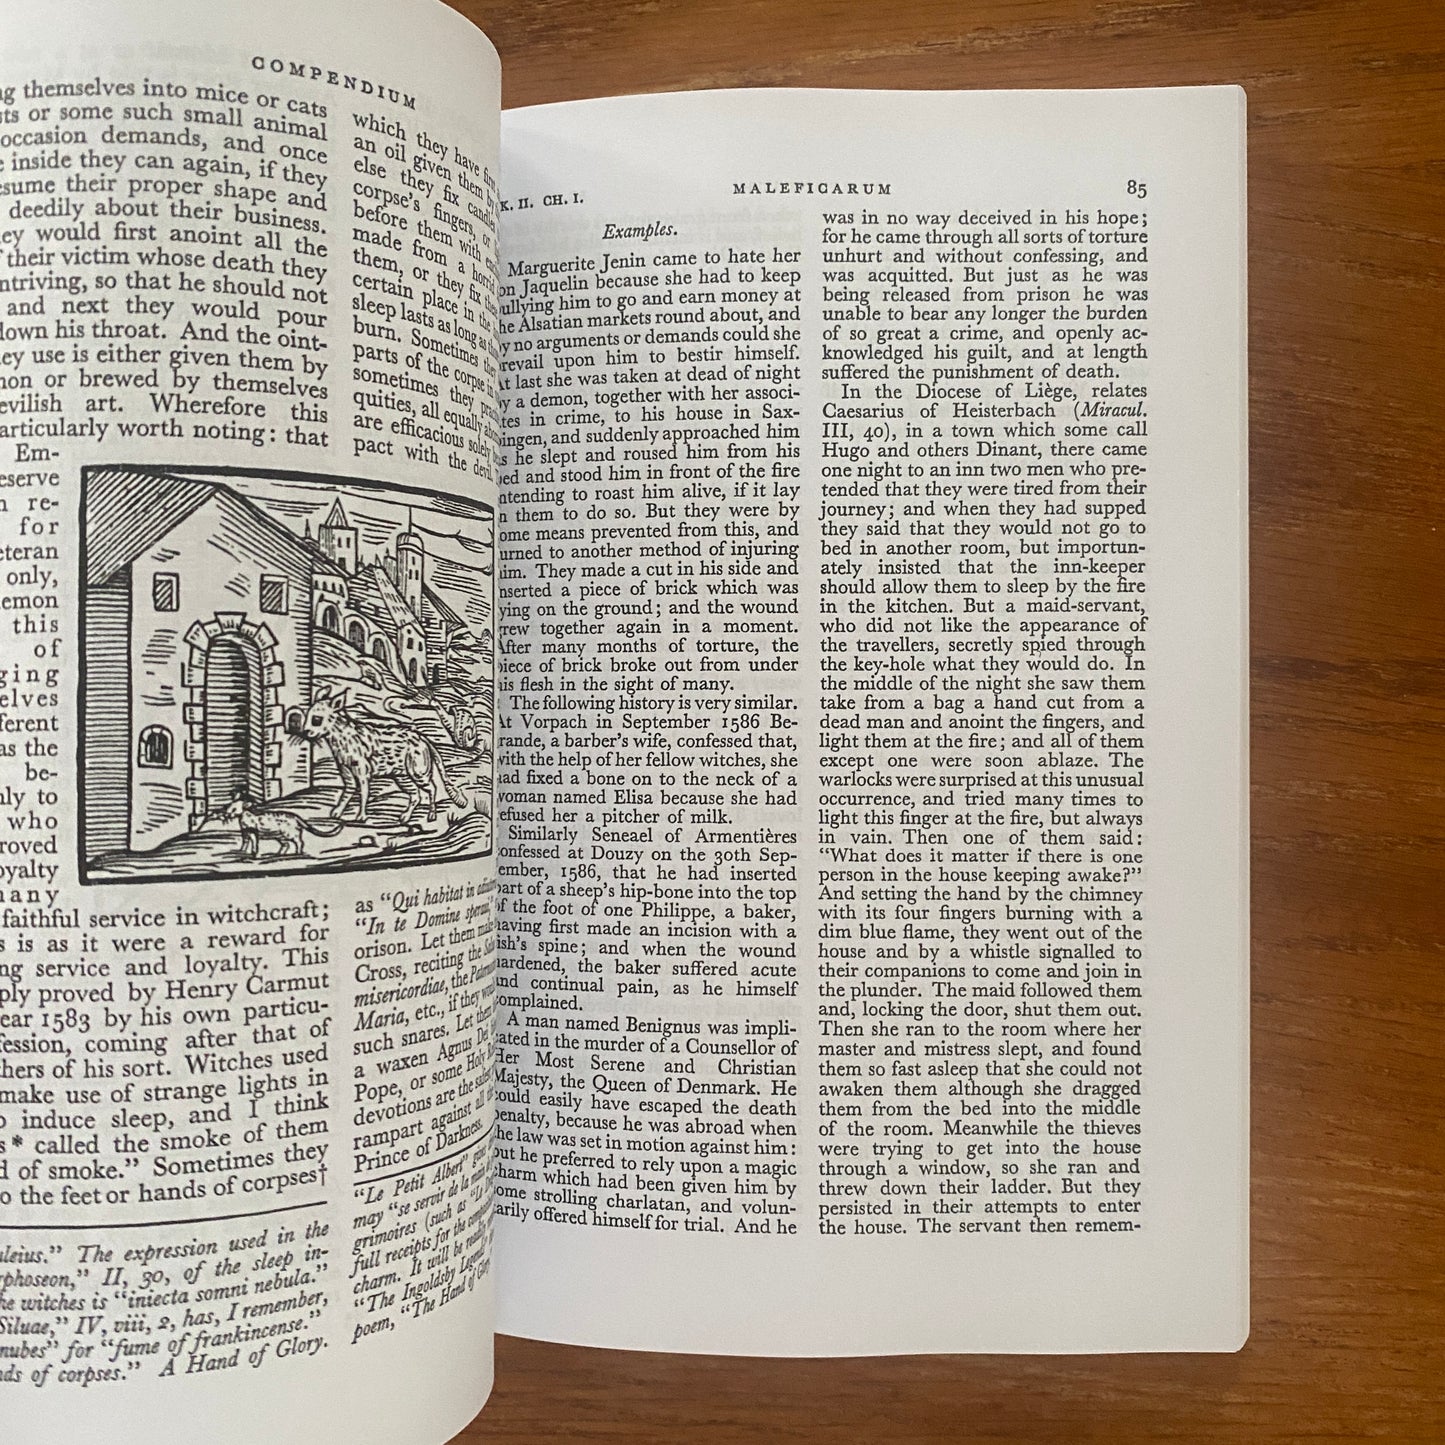 Compendium Malificarum: The Montague Summers Edition –  Francesco Maria Guazzo